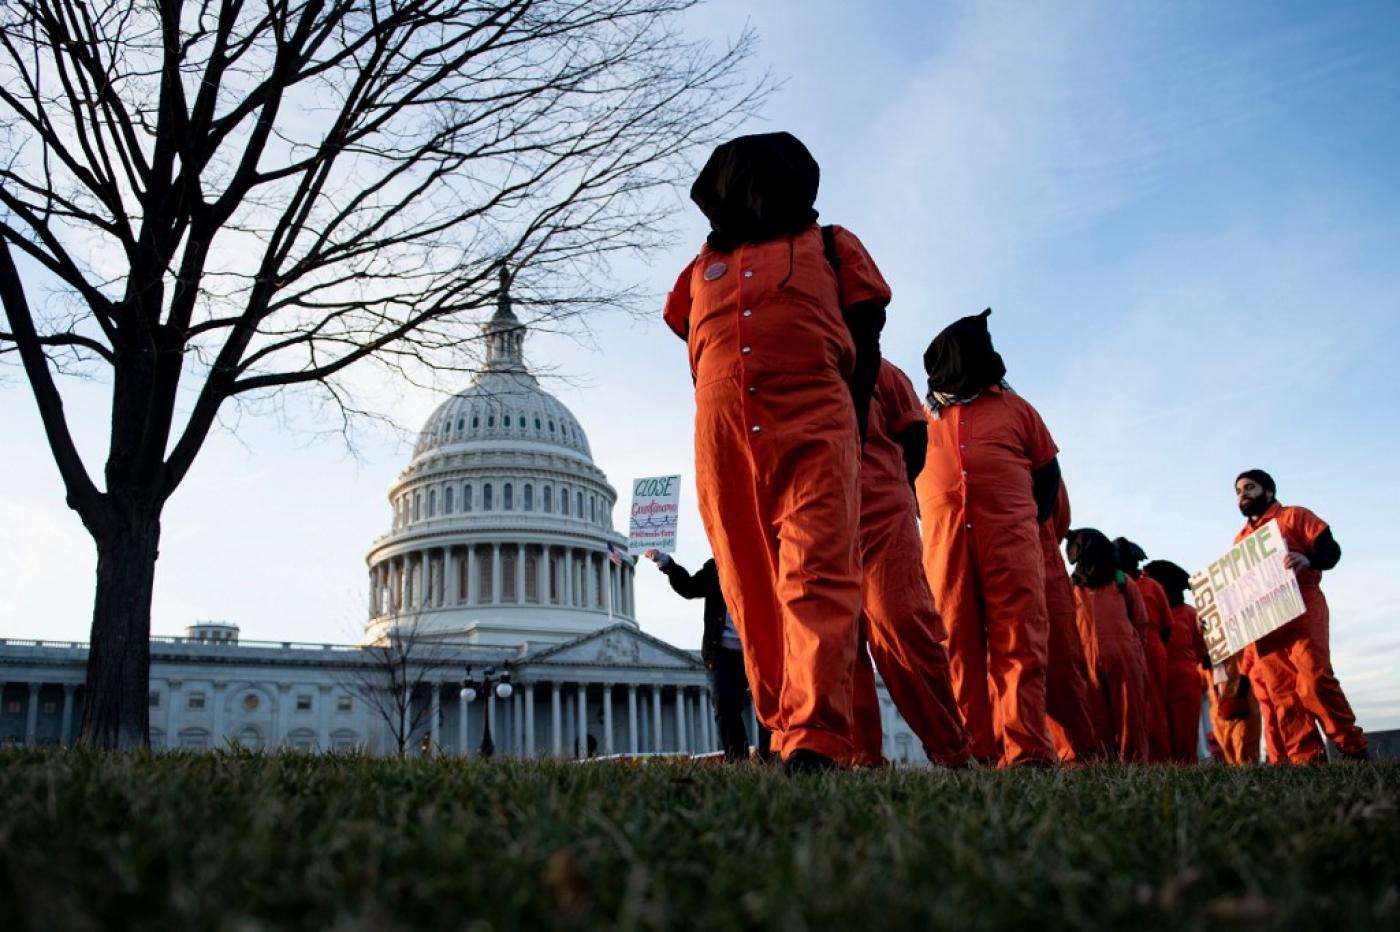 Guantanamo: An Enduring Symbol of US Islamophobia